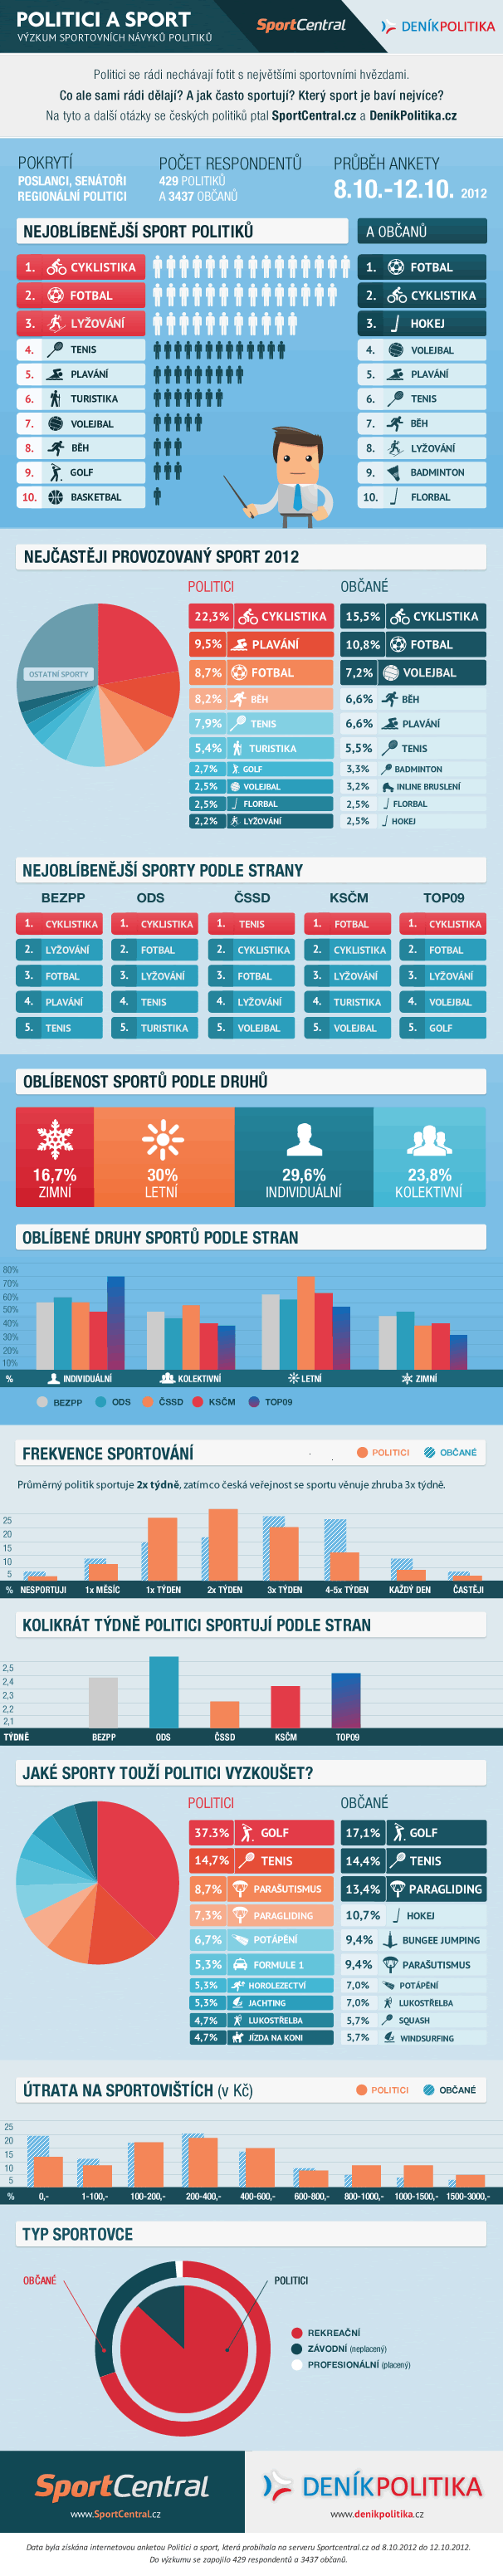 Sociologický výzkum Sport roku 2012 - politici